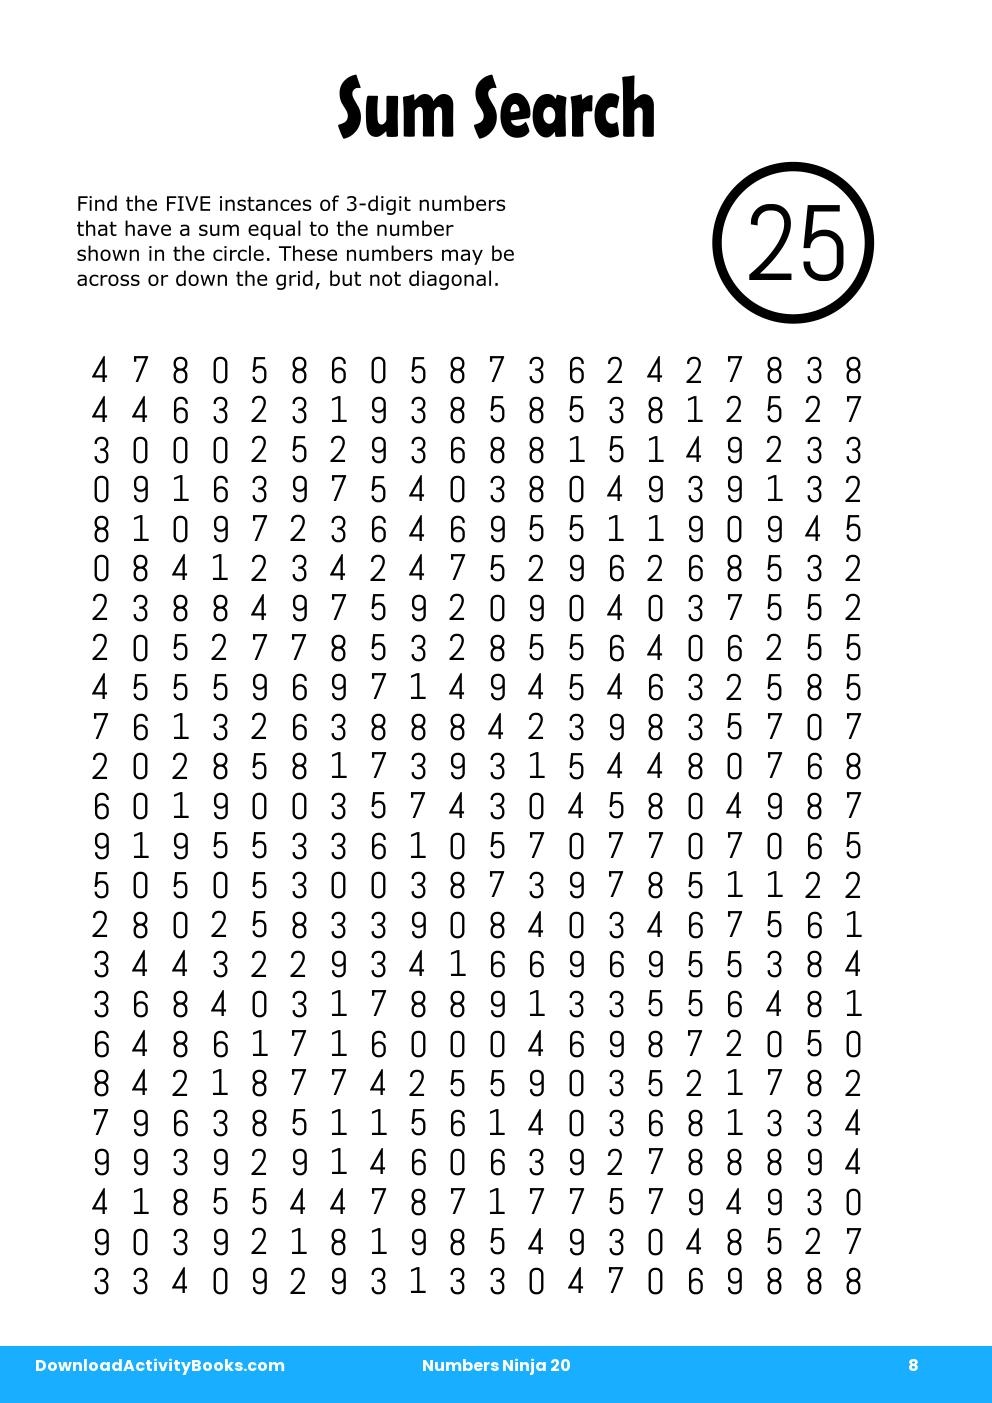 Sum Search in Numbers Ninja 20